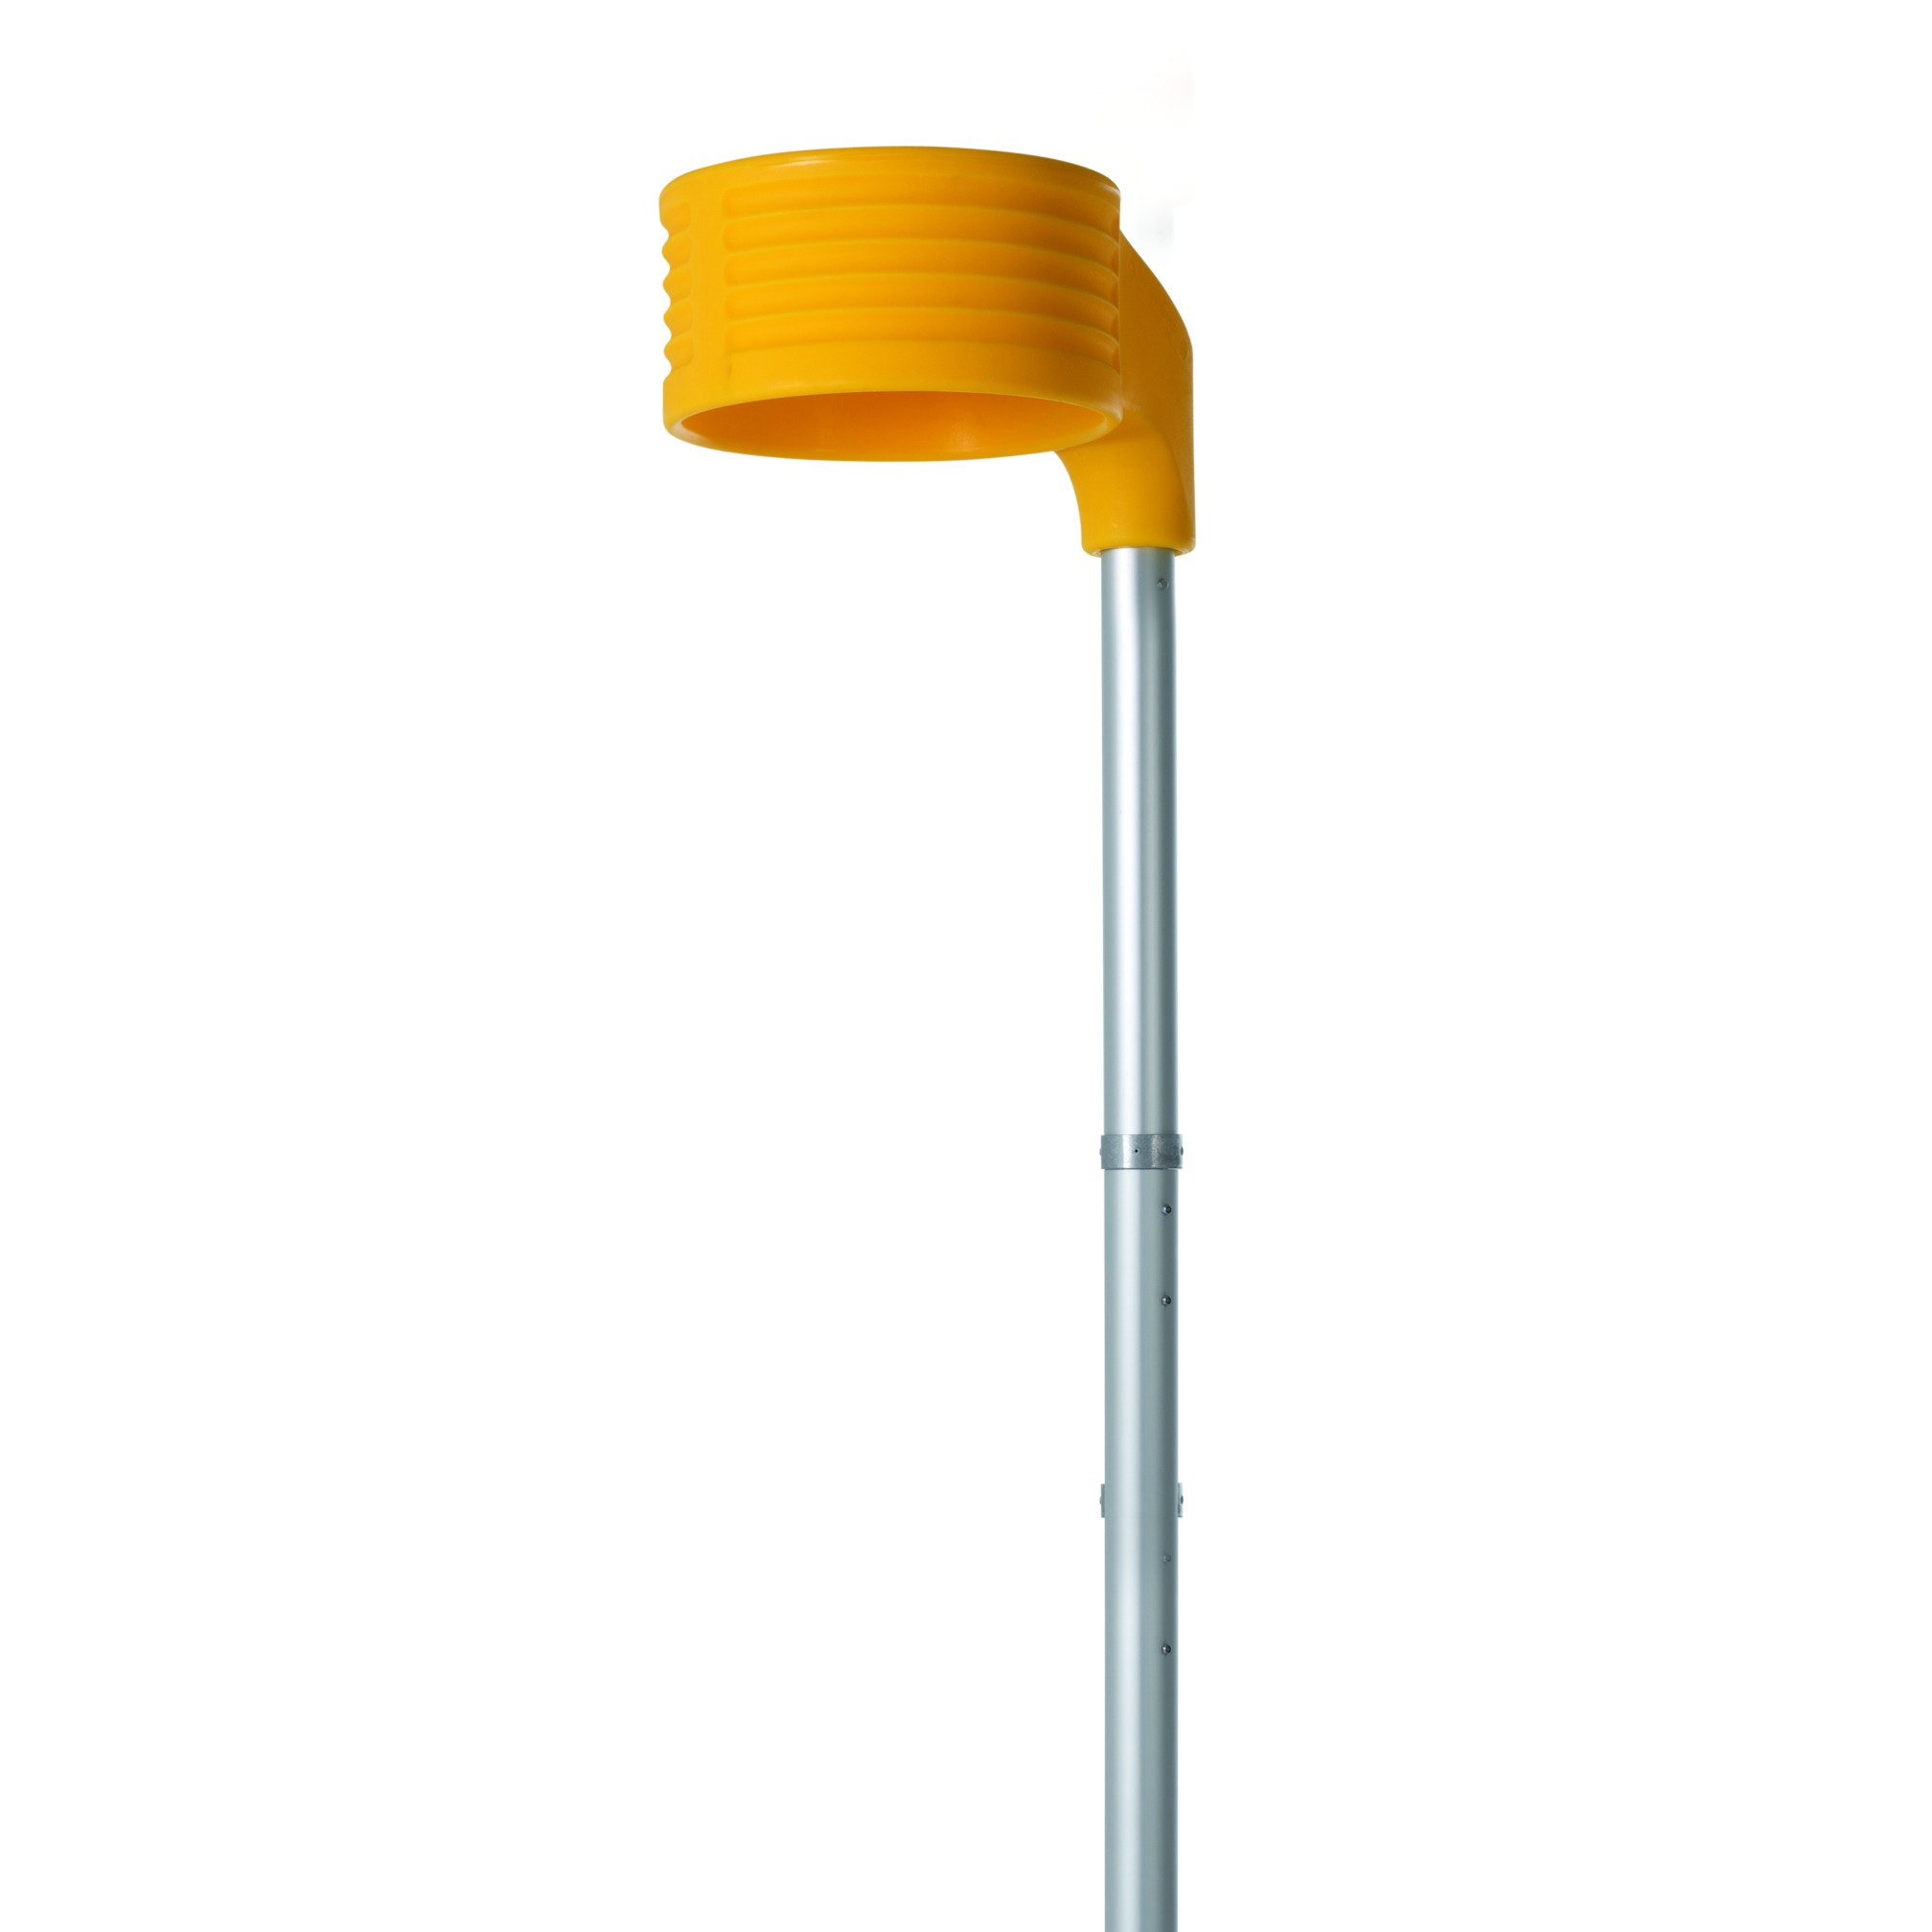 Modular korfball post, extension piece 50 cm